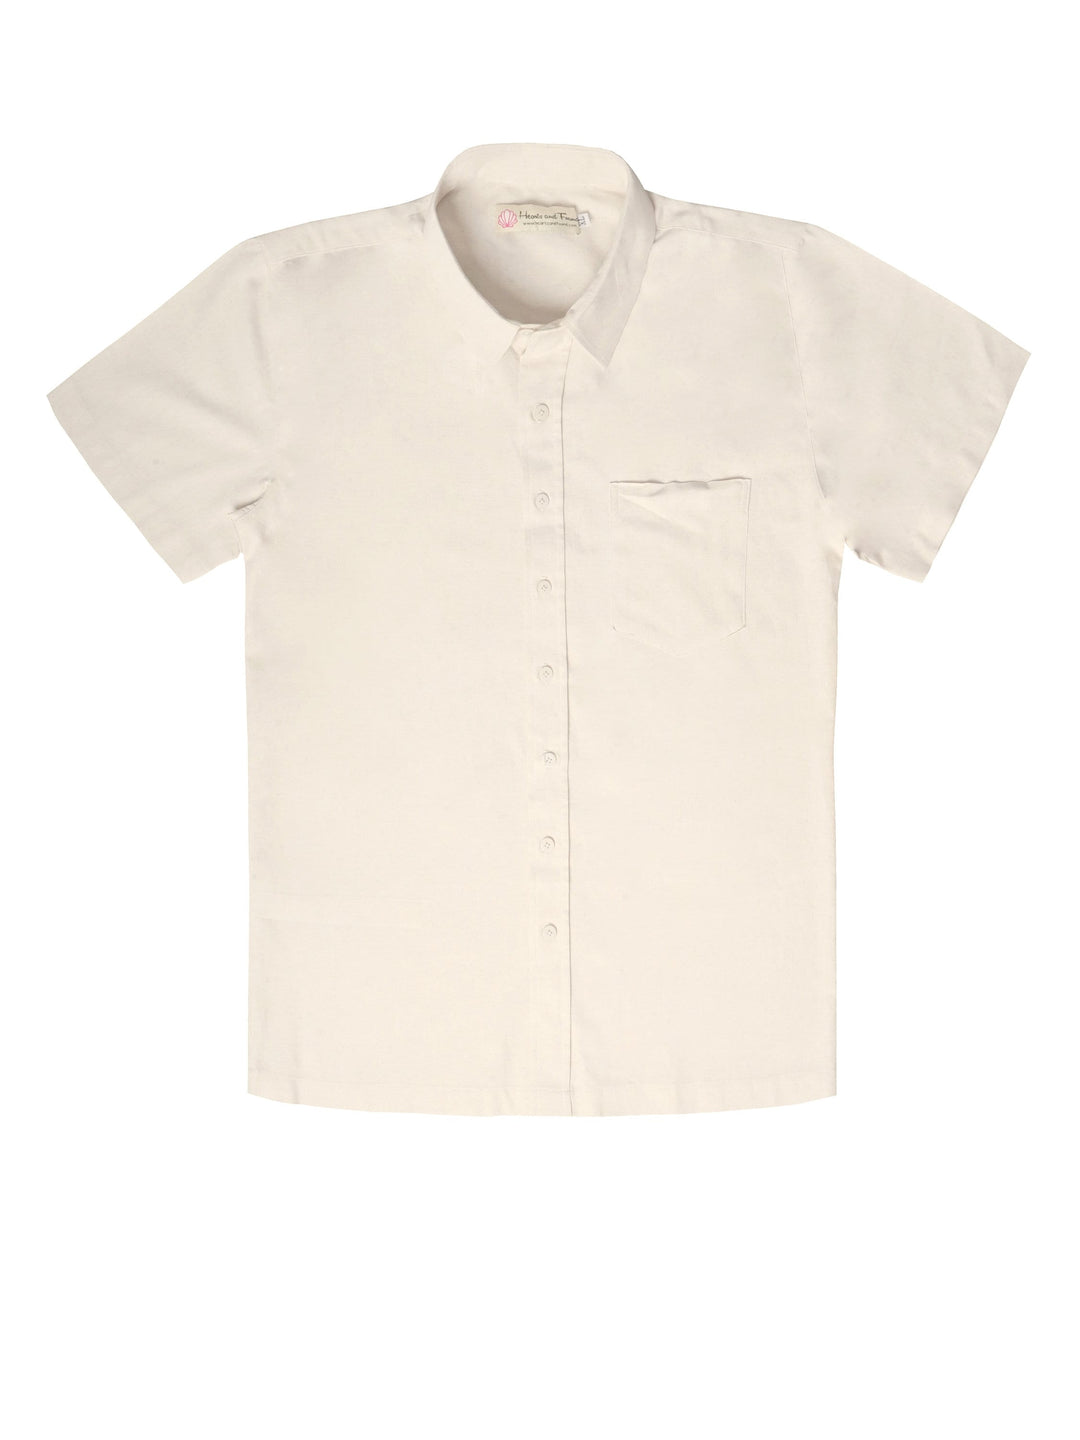 RTS - Size XL - Men's Shirt in Parchment Ivory Linen